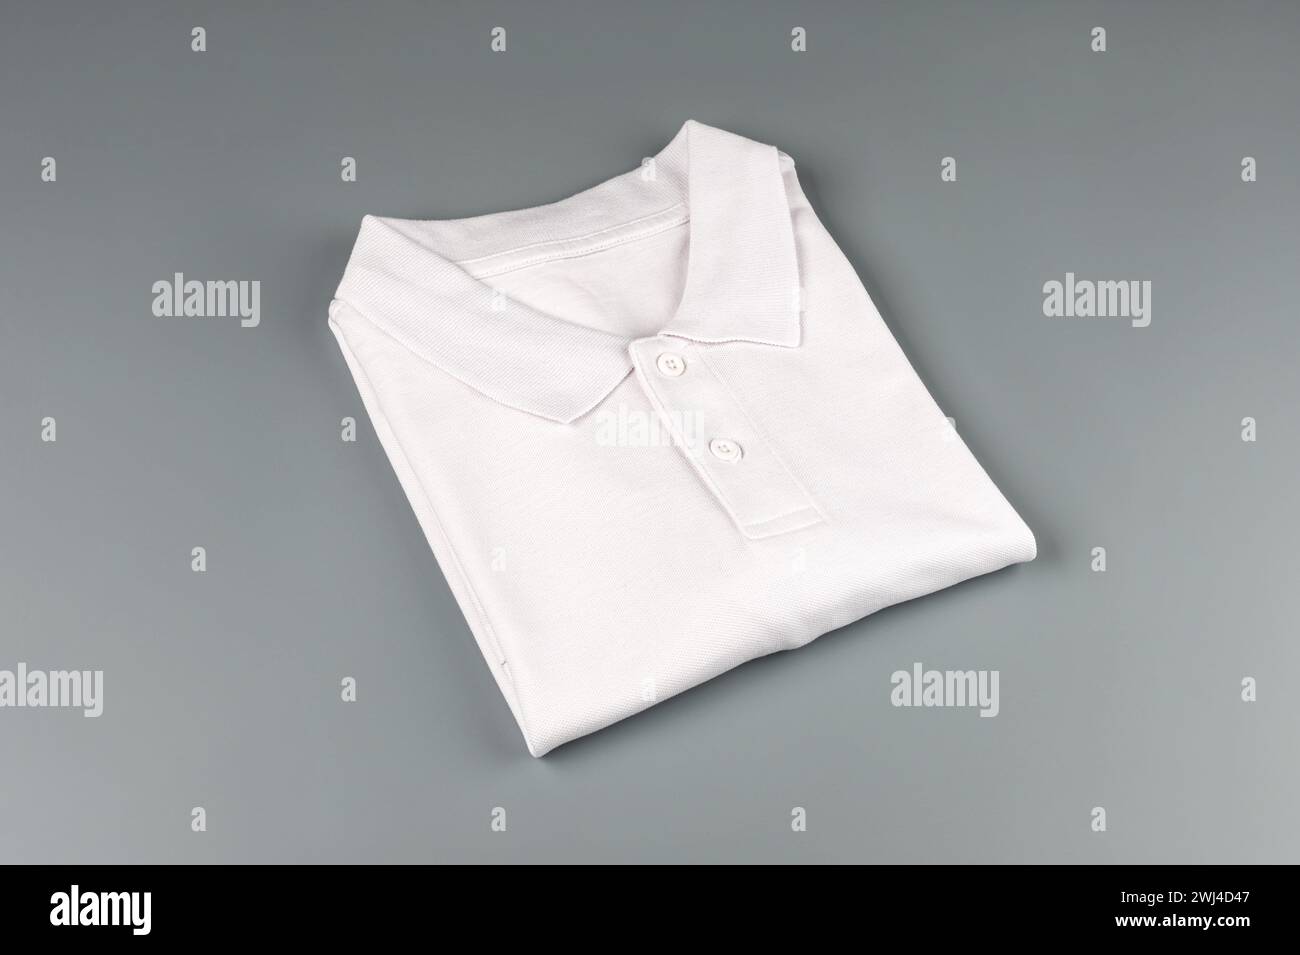 White Polo shirt, on isolated white background. Stock Photo